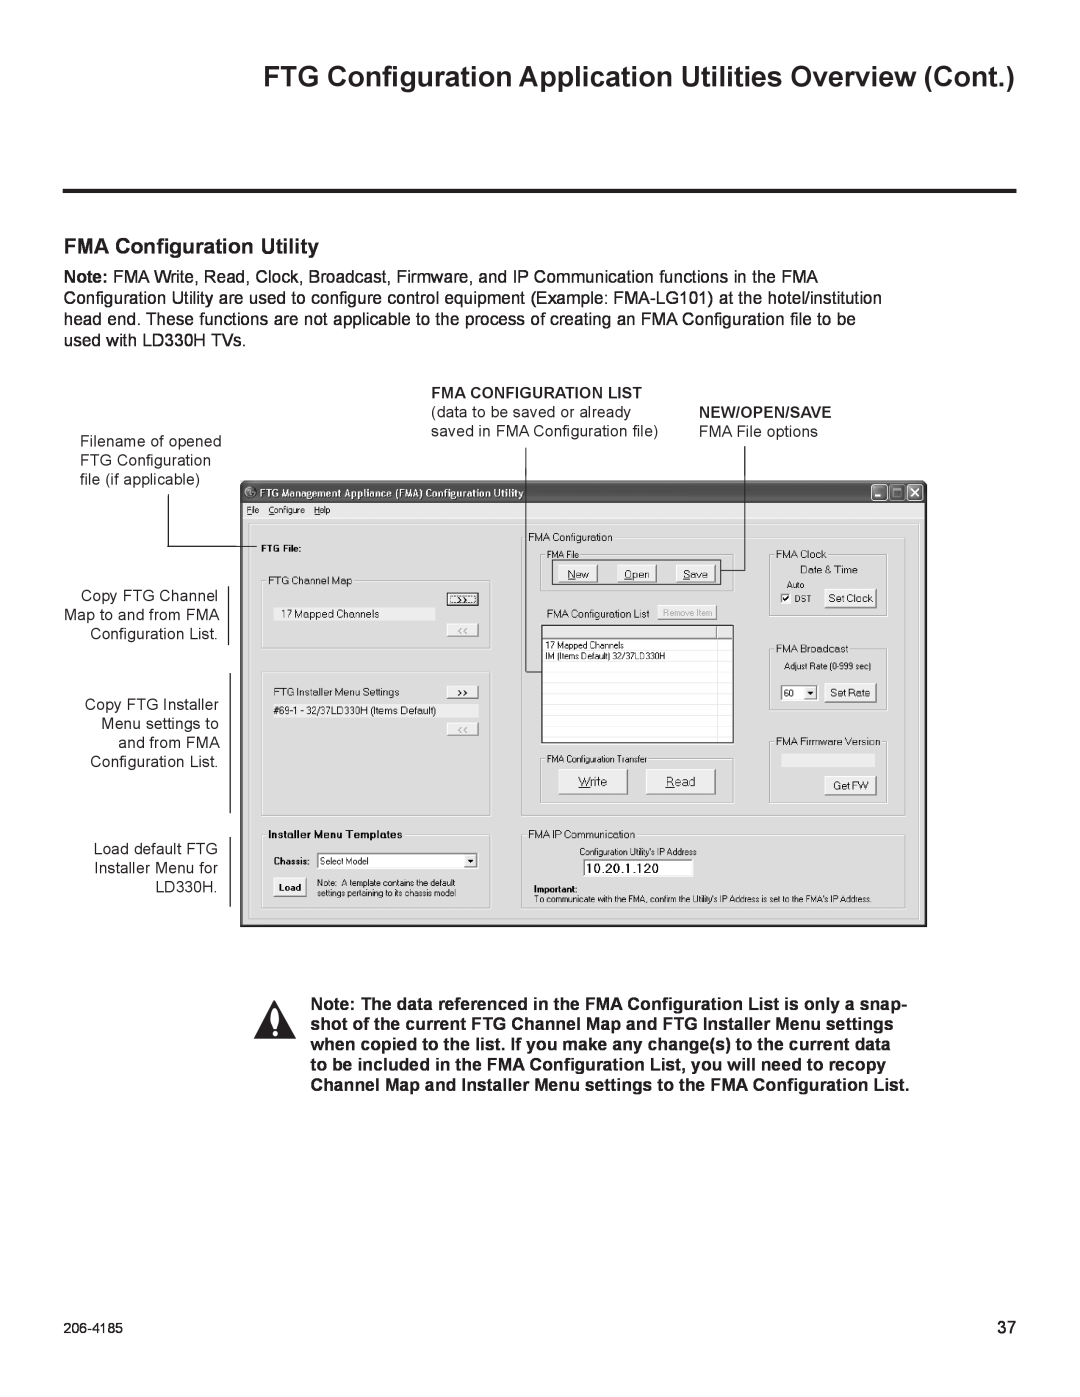 LG Electronics 37LD330H FMA Configuration Utility, FTG Configuration Application Utilities Overview Cont, New/Open/Save 